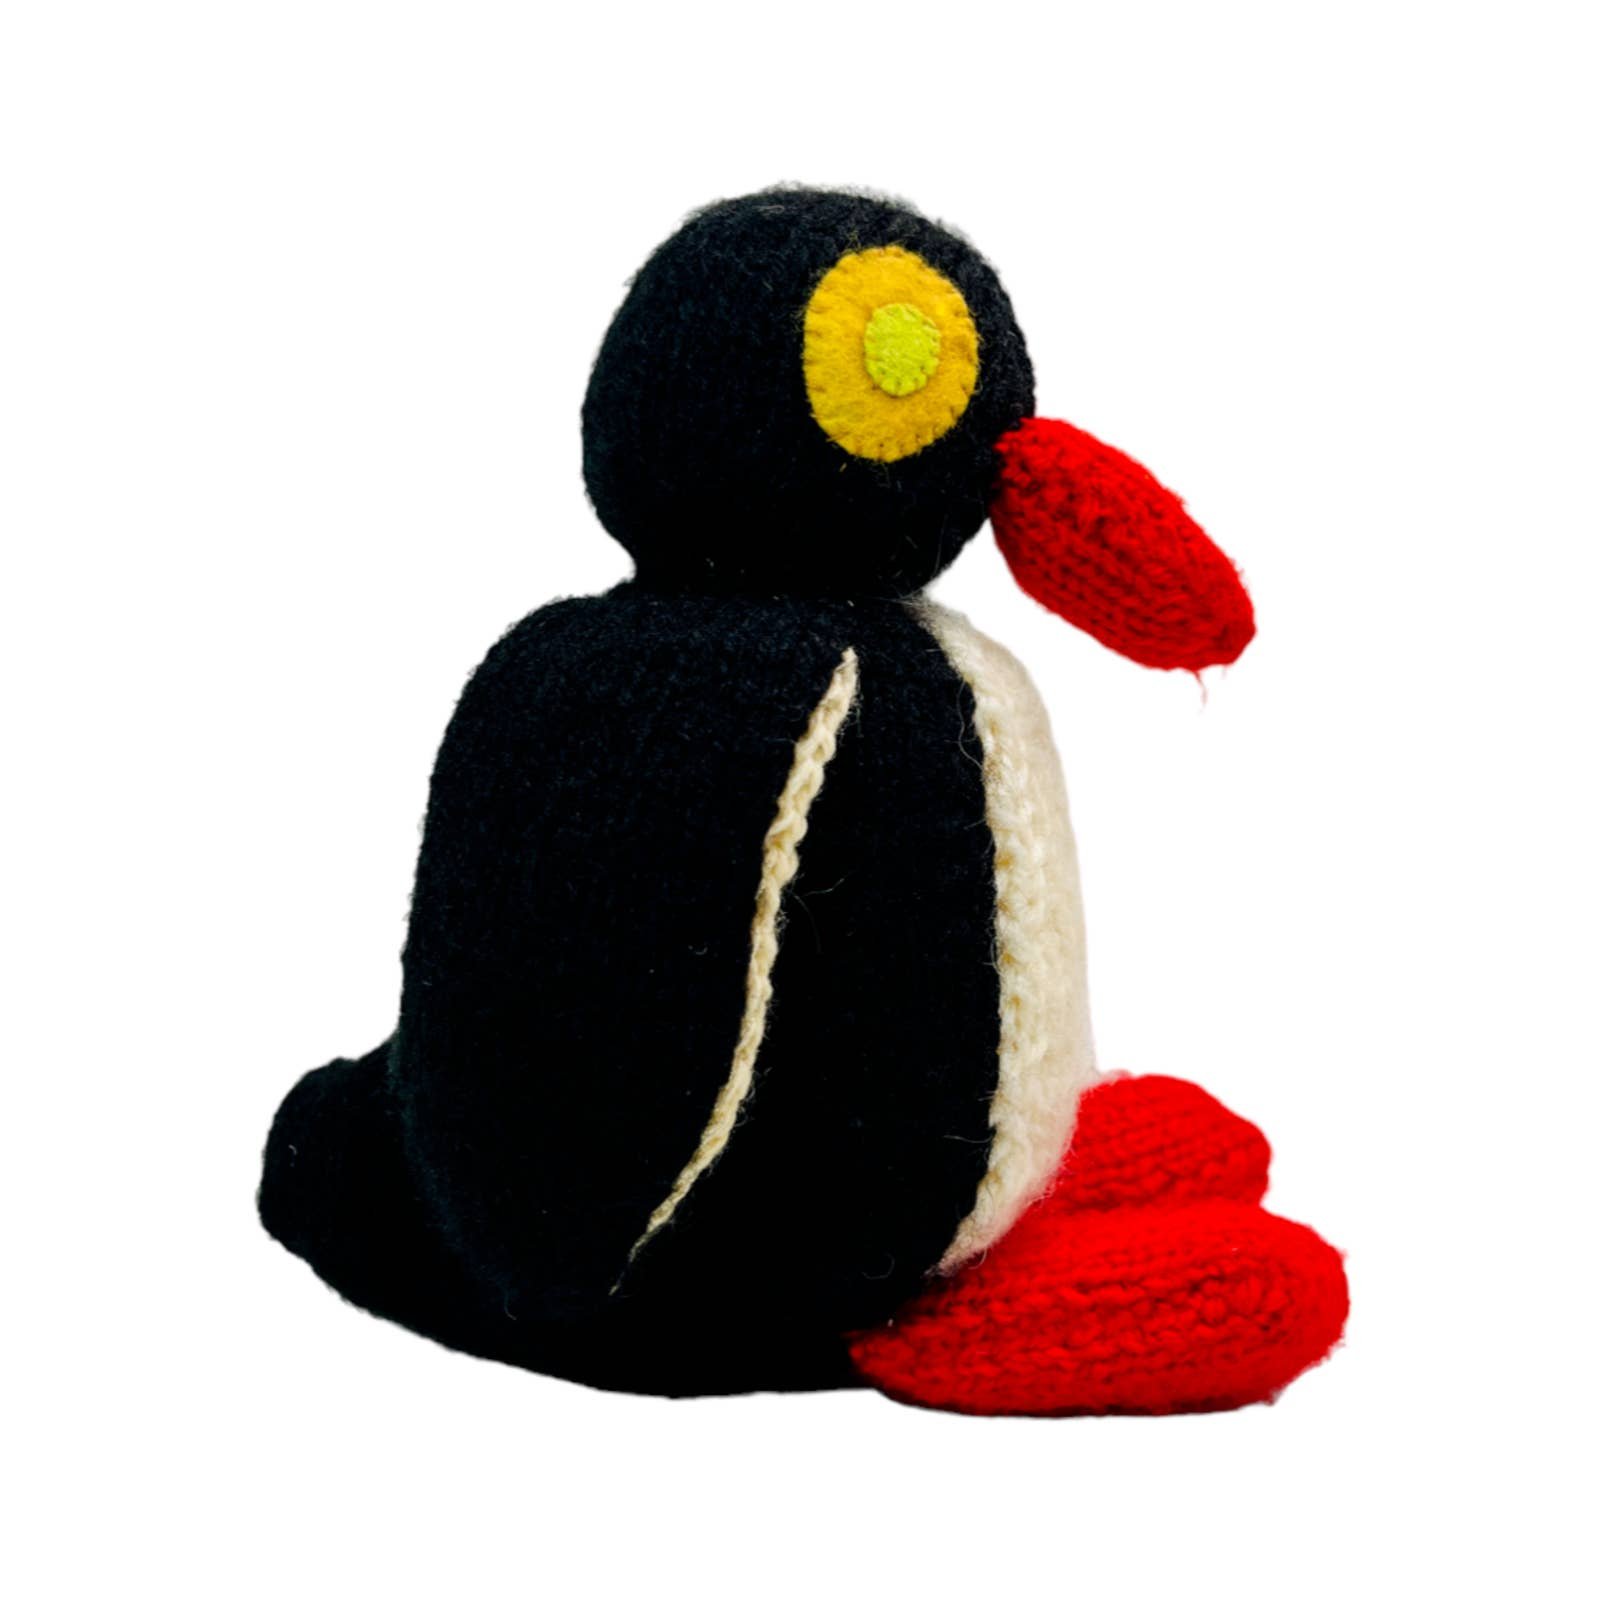 Knitted Penguin Plush Stuffed Animal Handmade Beanbag 6” Toy Cute Small OOAK fkATXx2jY